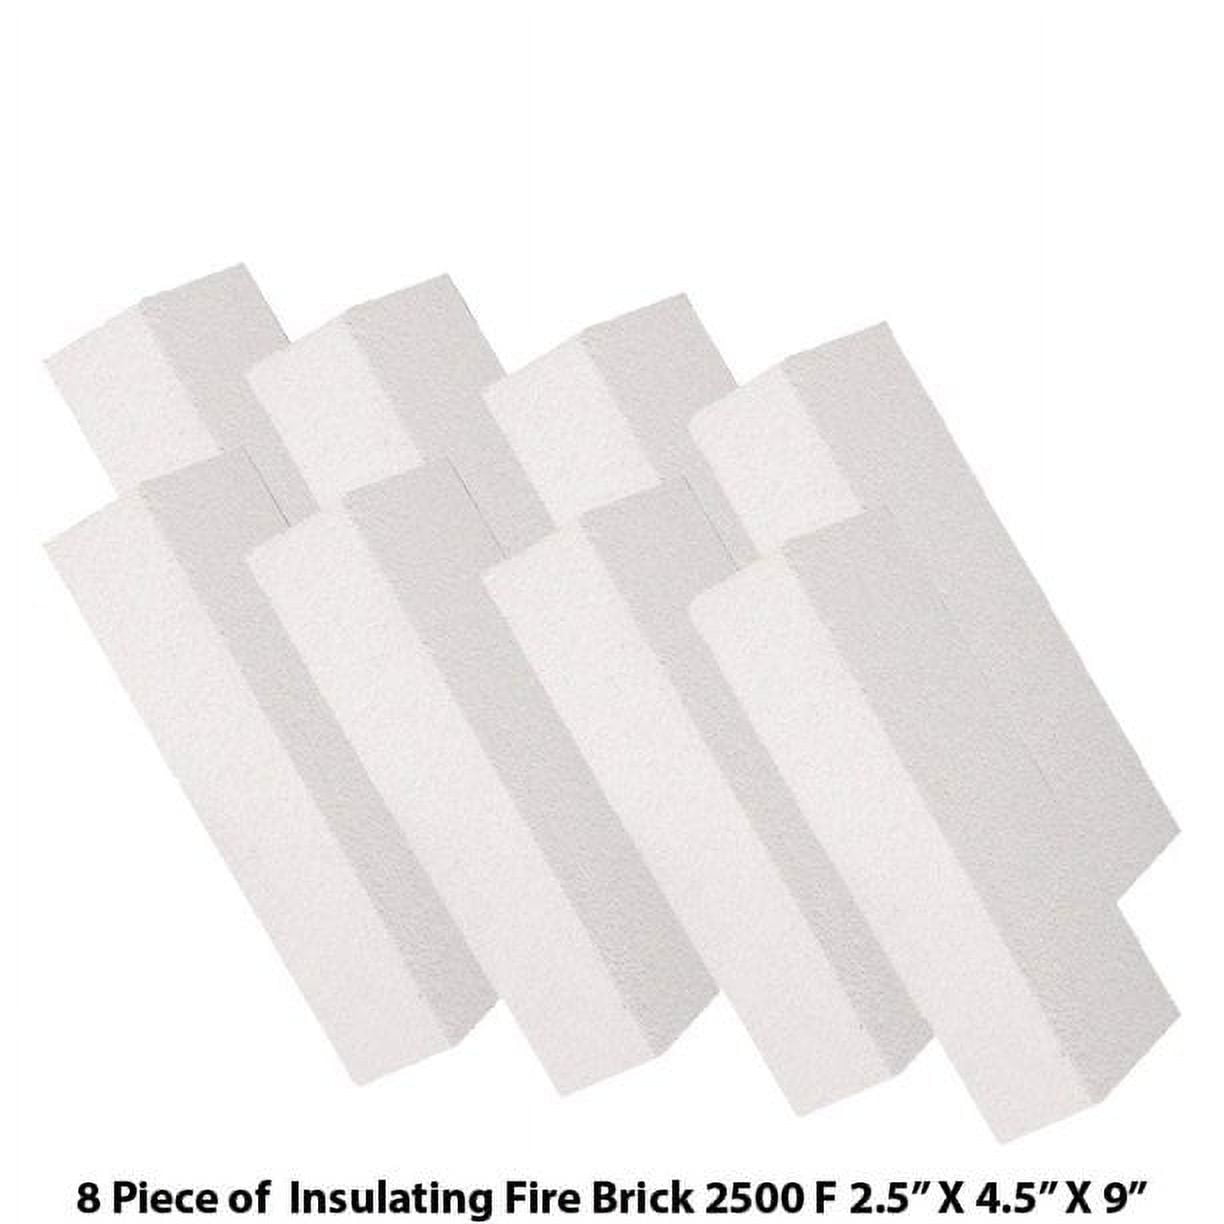 Simond Store 25 Insulating Fire Brick 2500F 2in x 4.5in x 9in IFB Box of 16 Fire Bricks, White